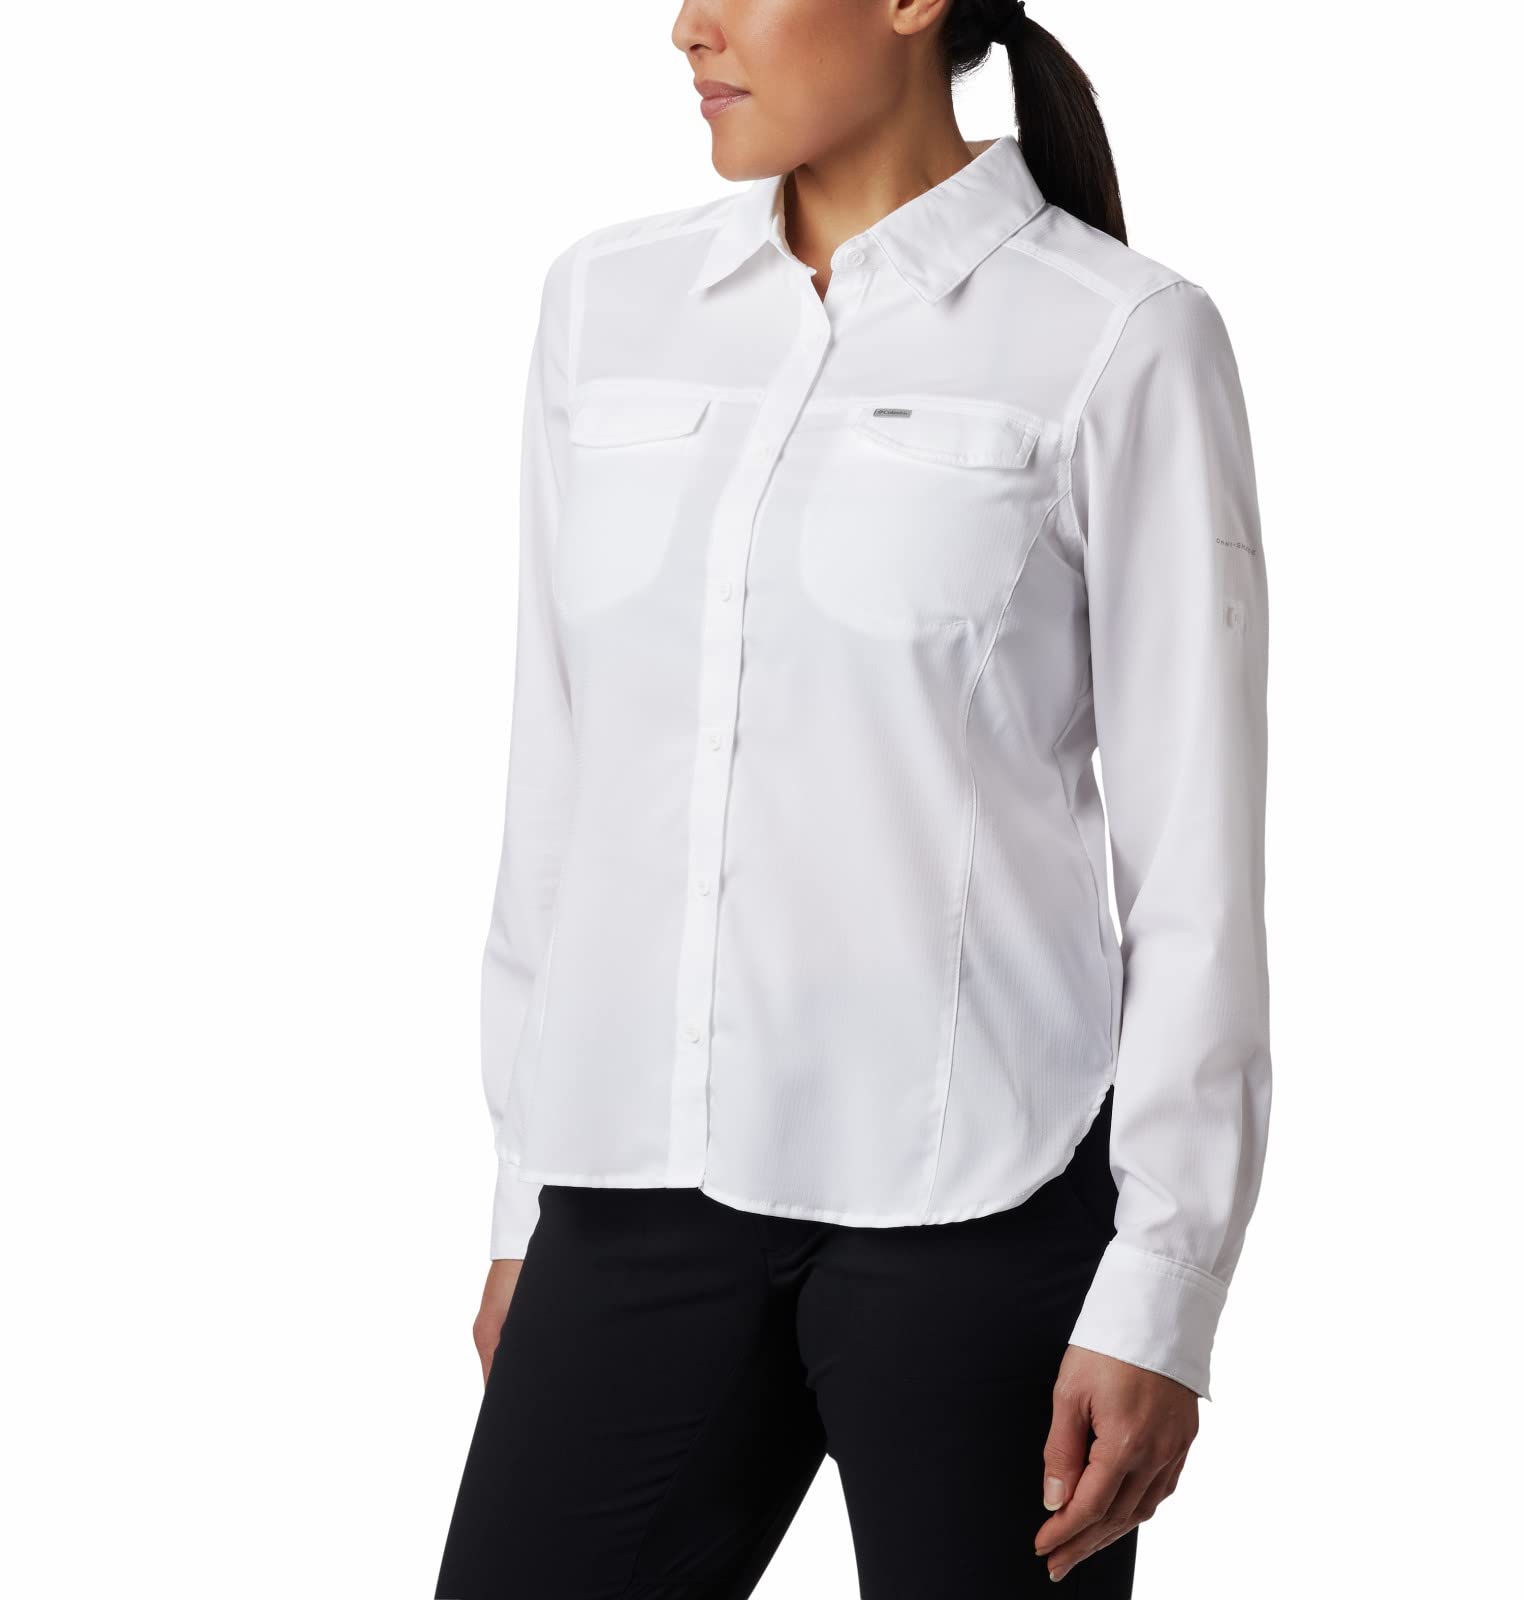 Columbia Women's Silver Ridge Lite Long Sleeve Shirt, White, 3X